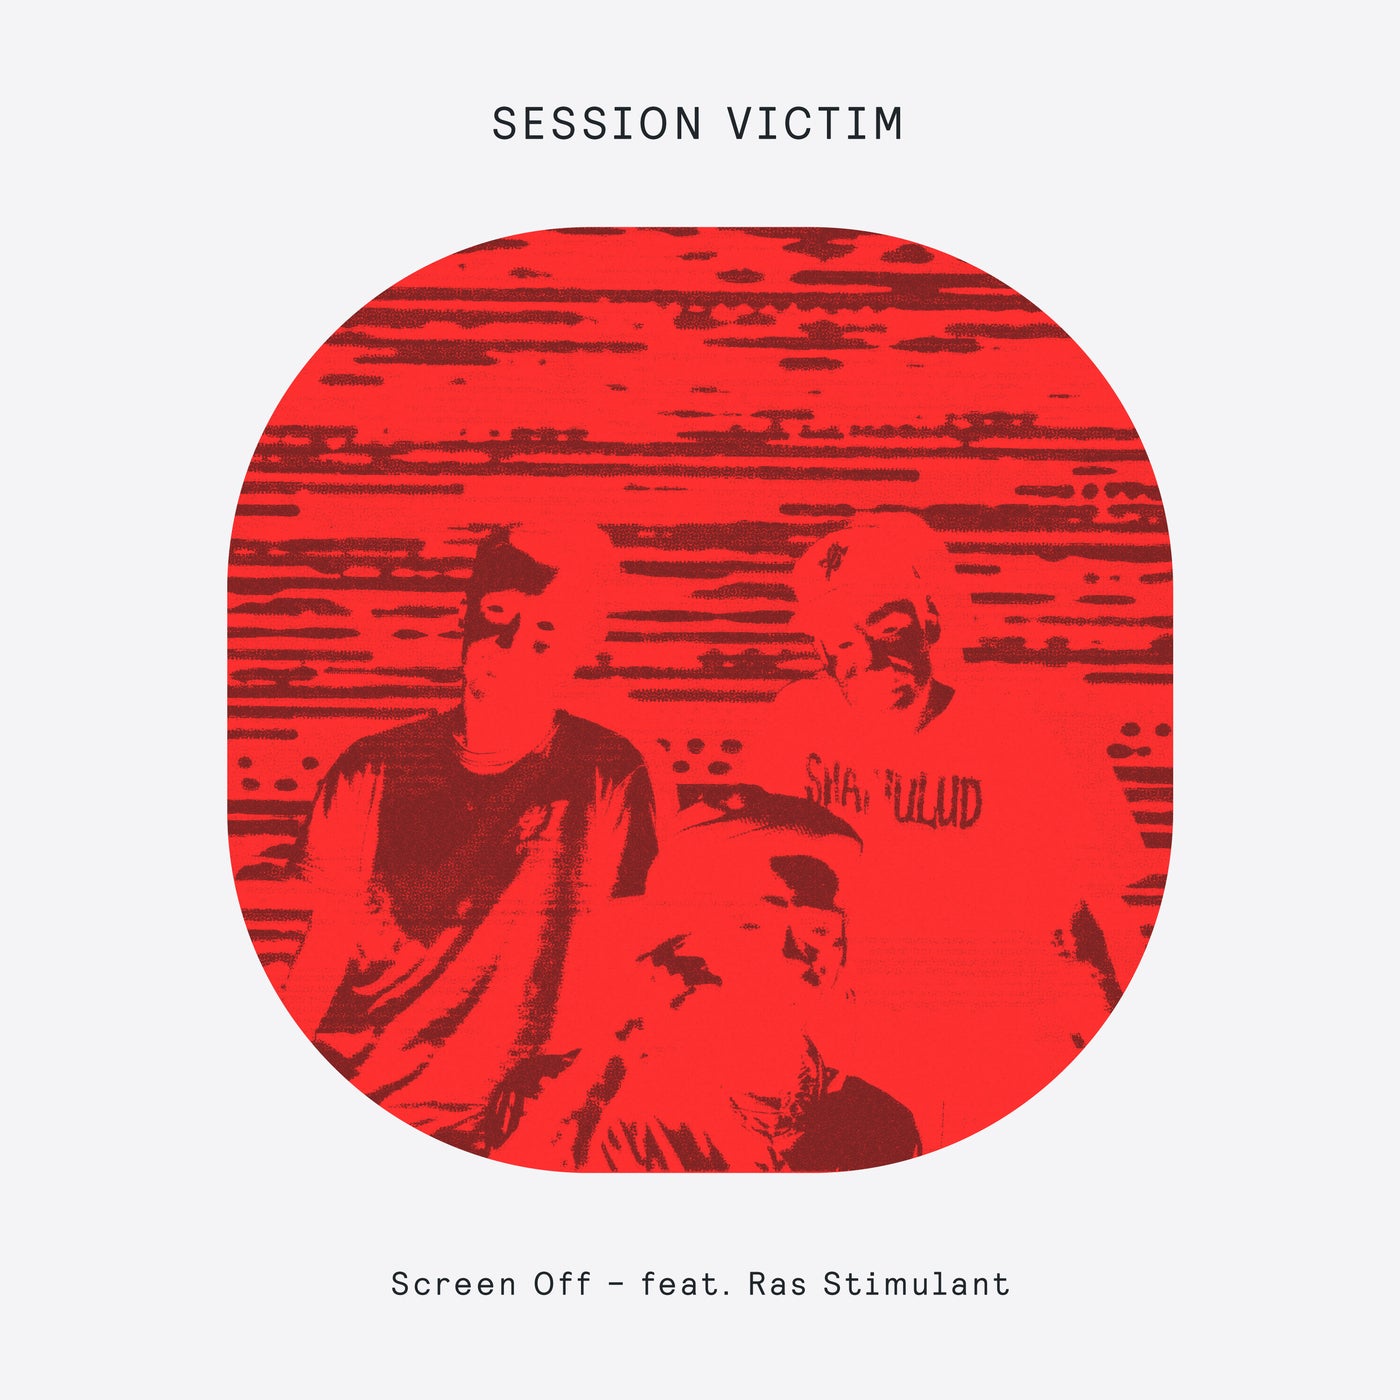 Cover - Session Victim, Ras Stimulant - Screen Off (feat. Ras Stimulant) (Original Mix)